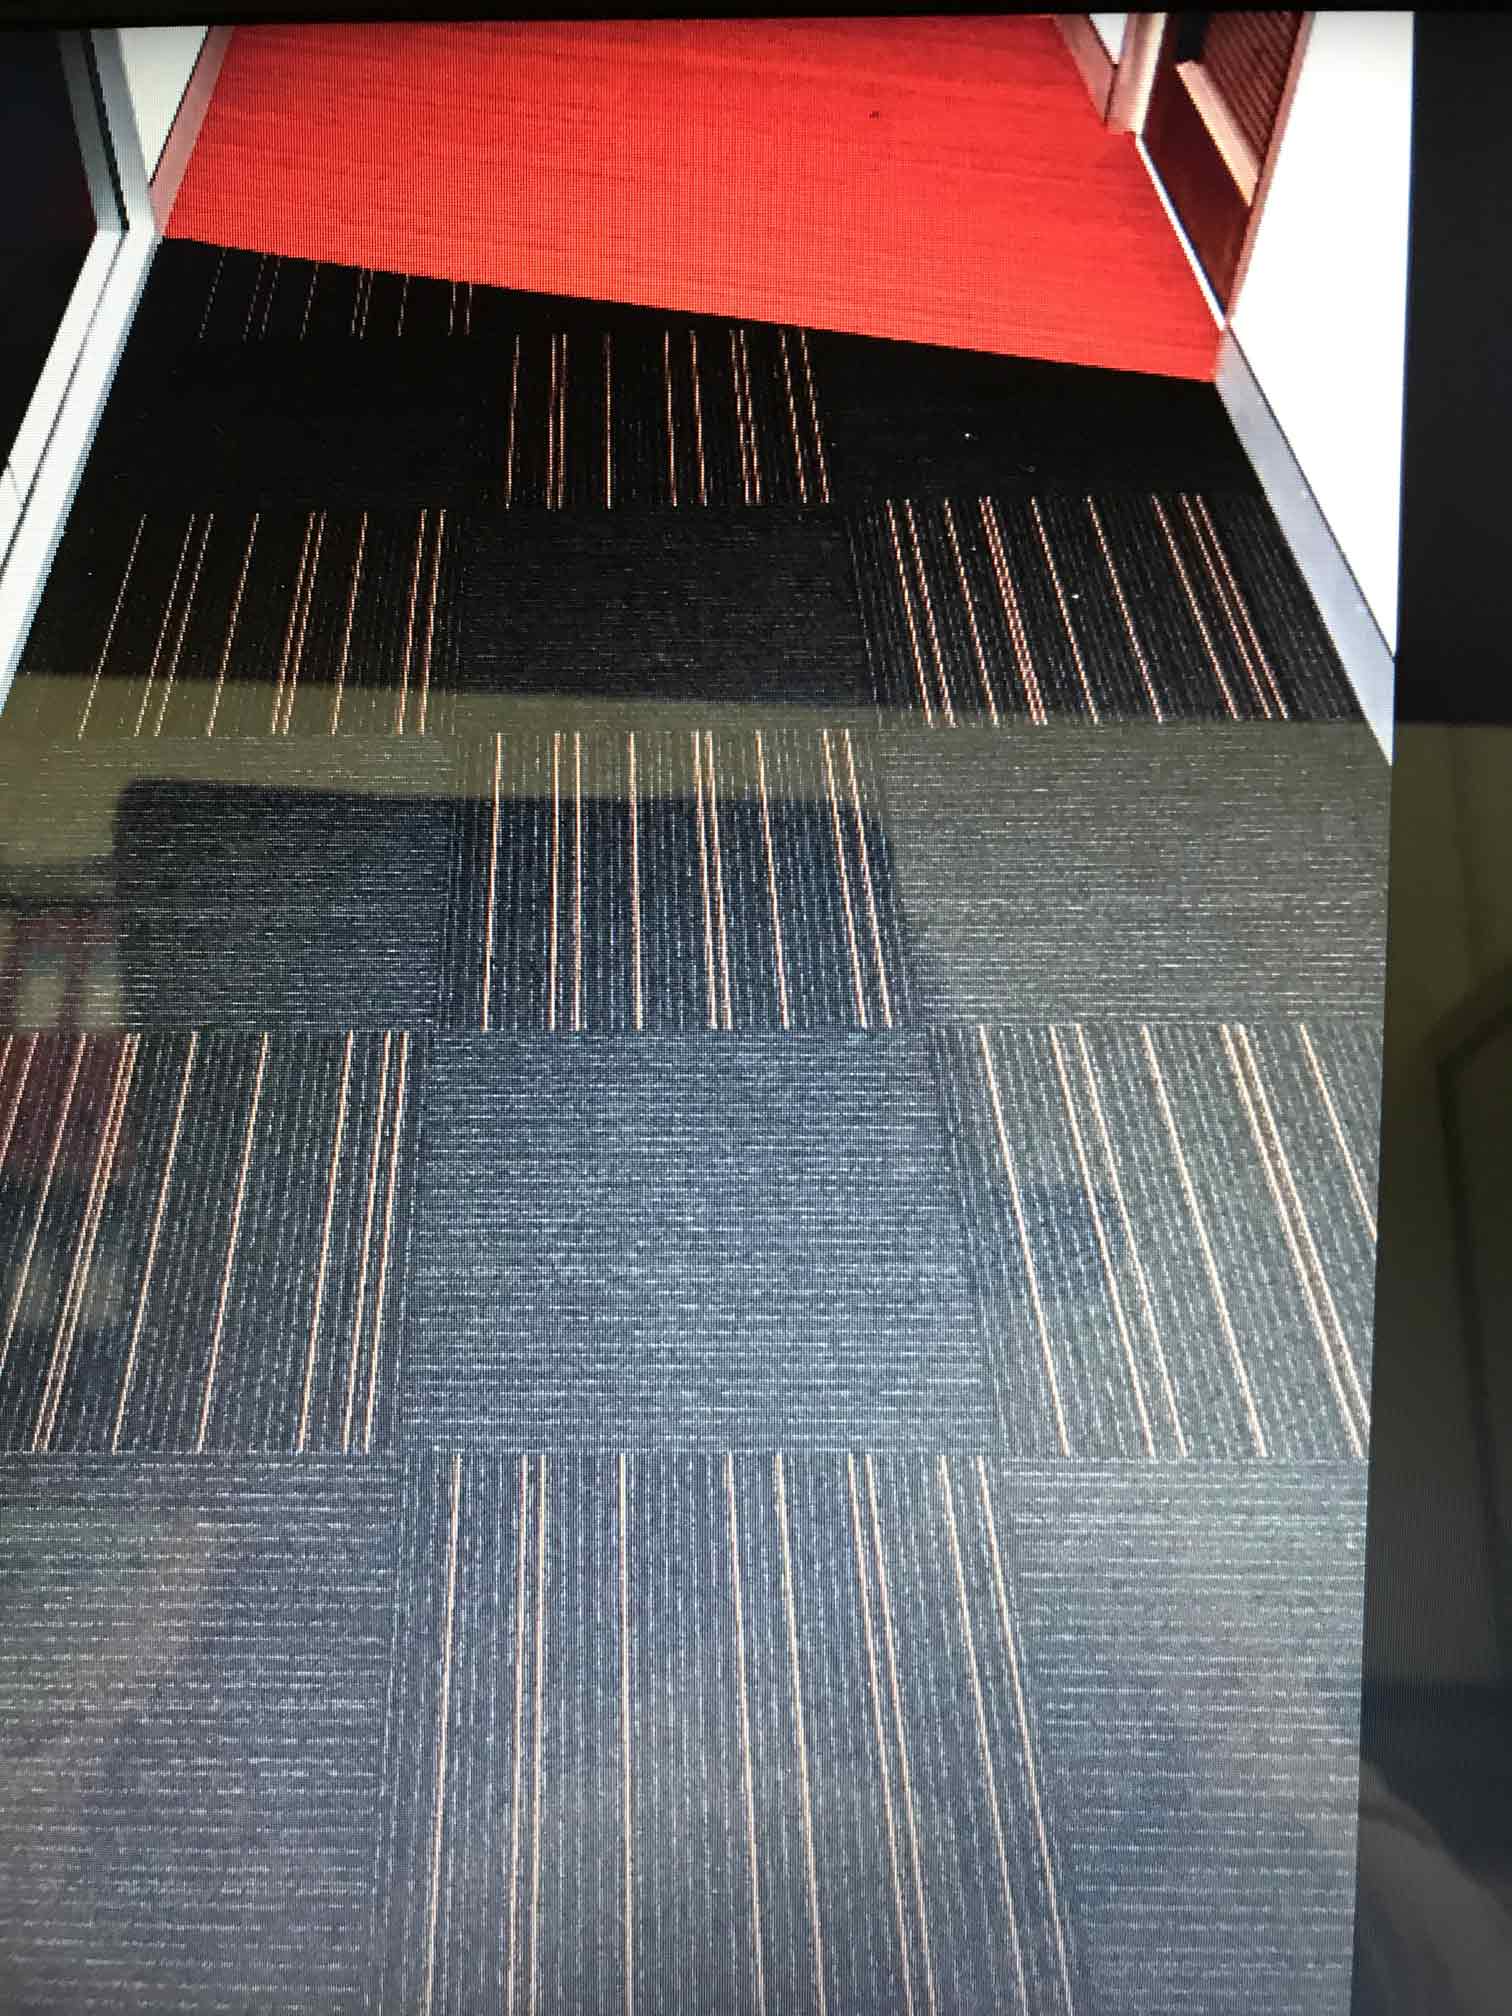 carpet tiles flooring